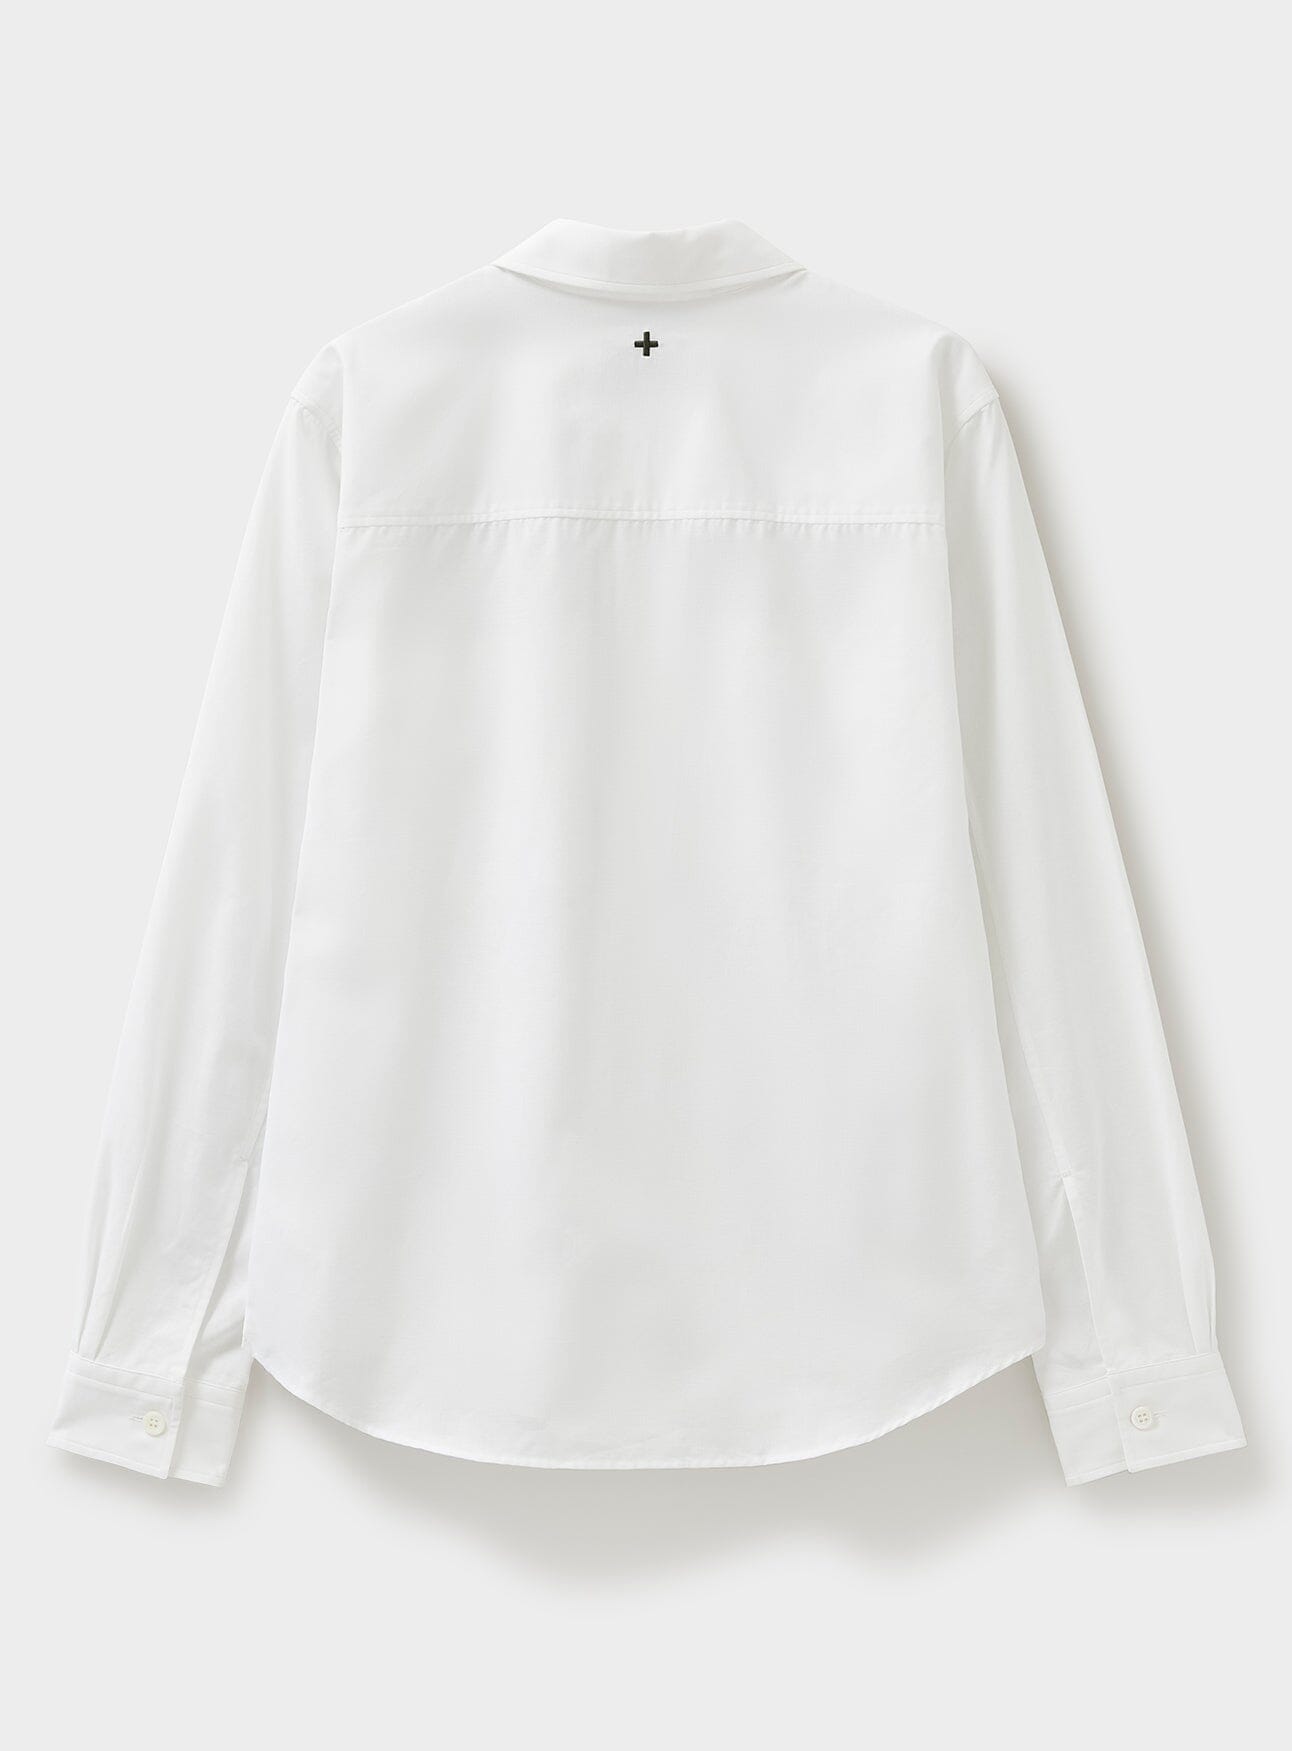 poplin, long sleeve white shirt